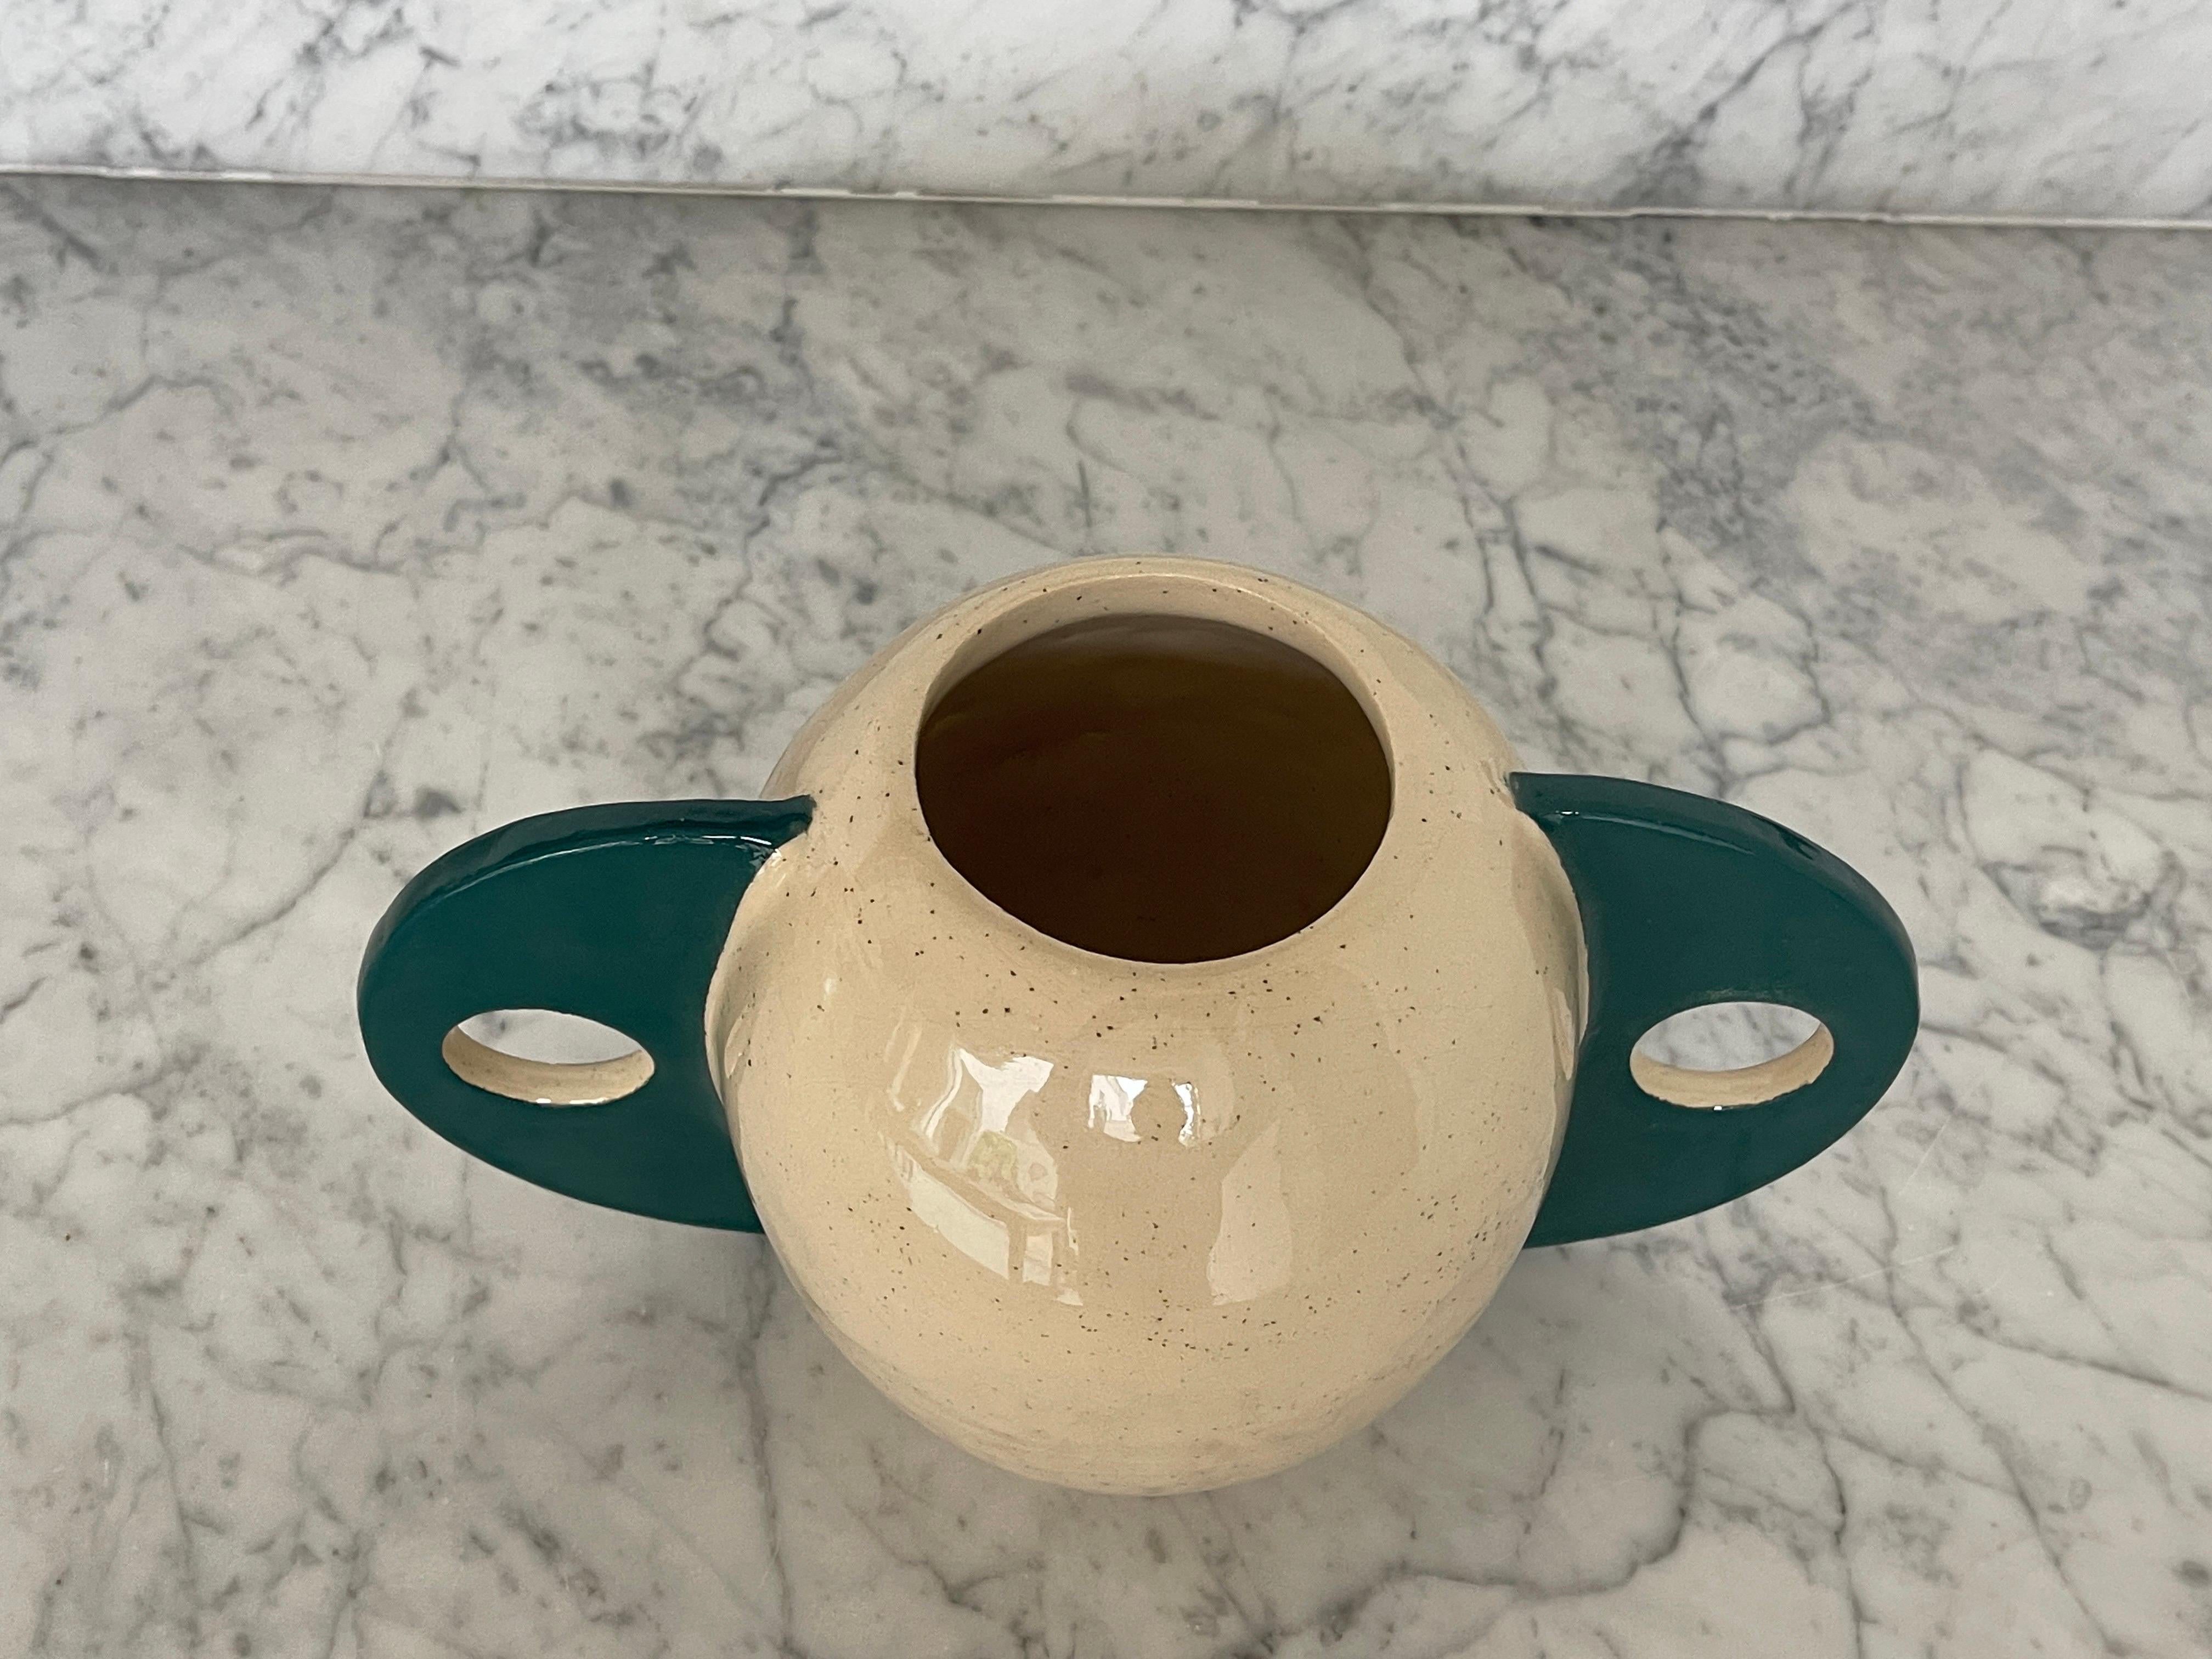 Handmade two tone ceramic vaze by chilean belgian artist Mariela Ceramica